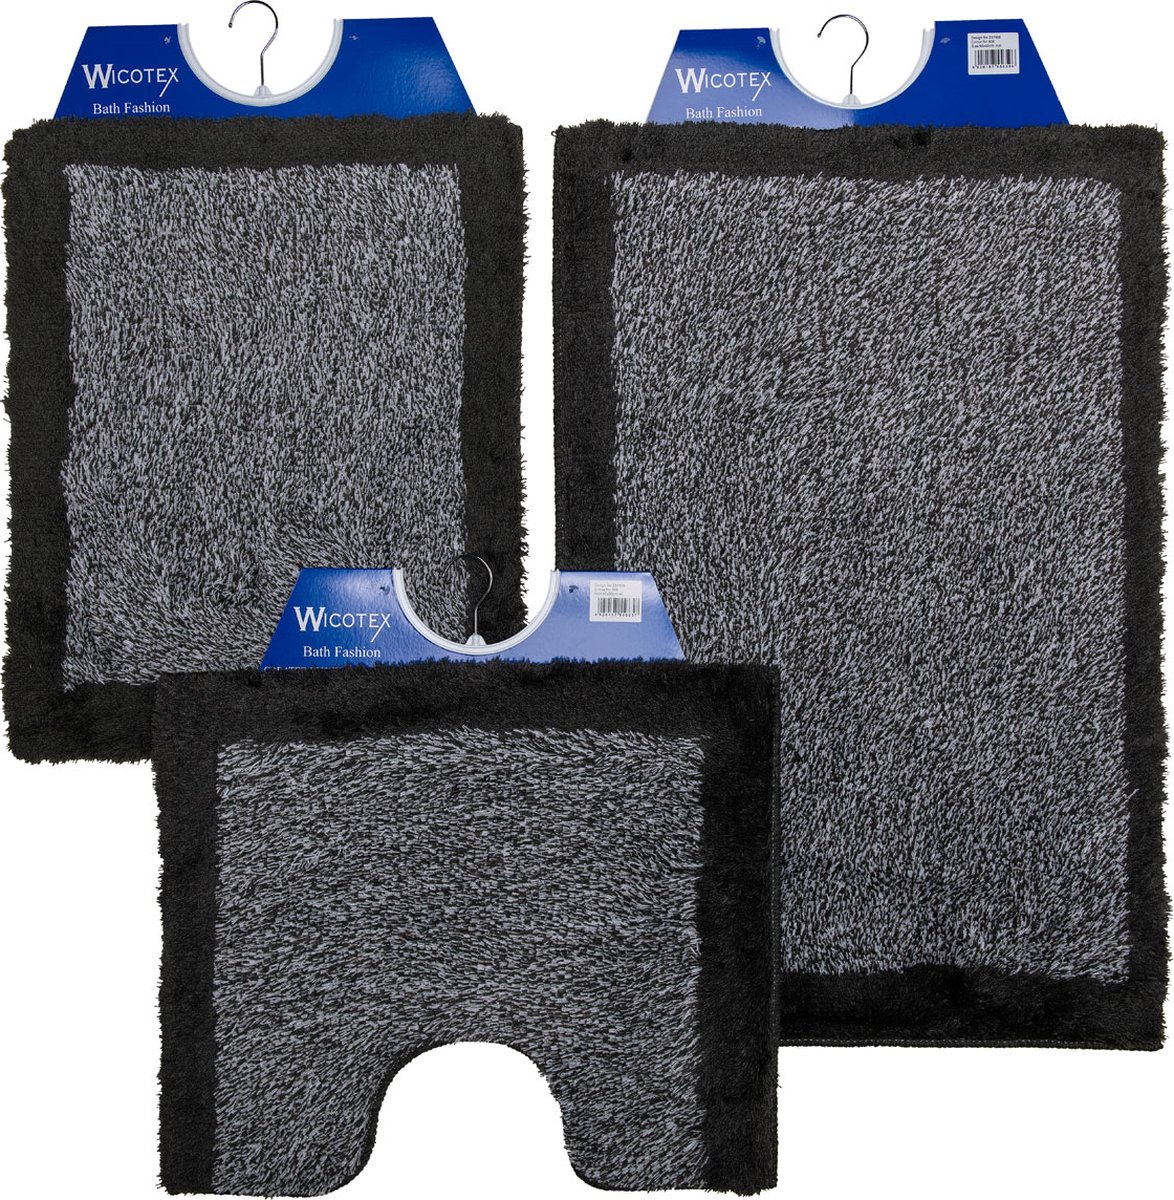 Wicotex - Badmat set - Badmat - Toiletmat - Bidetmat Grijs met Zwarte rand - Antislip onderkant - WC mat met uitsparing